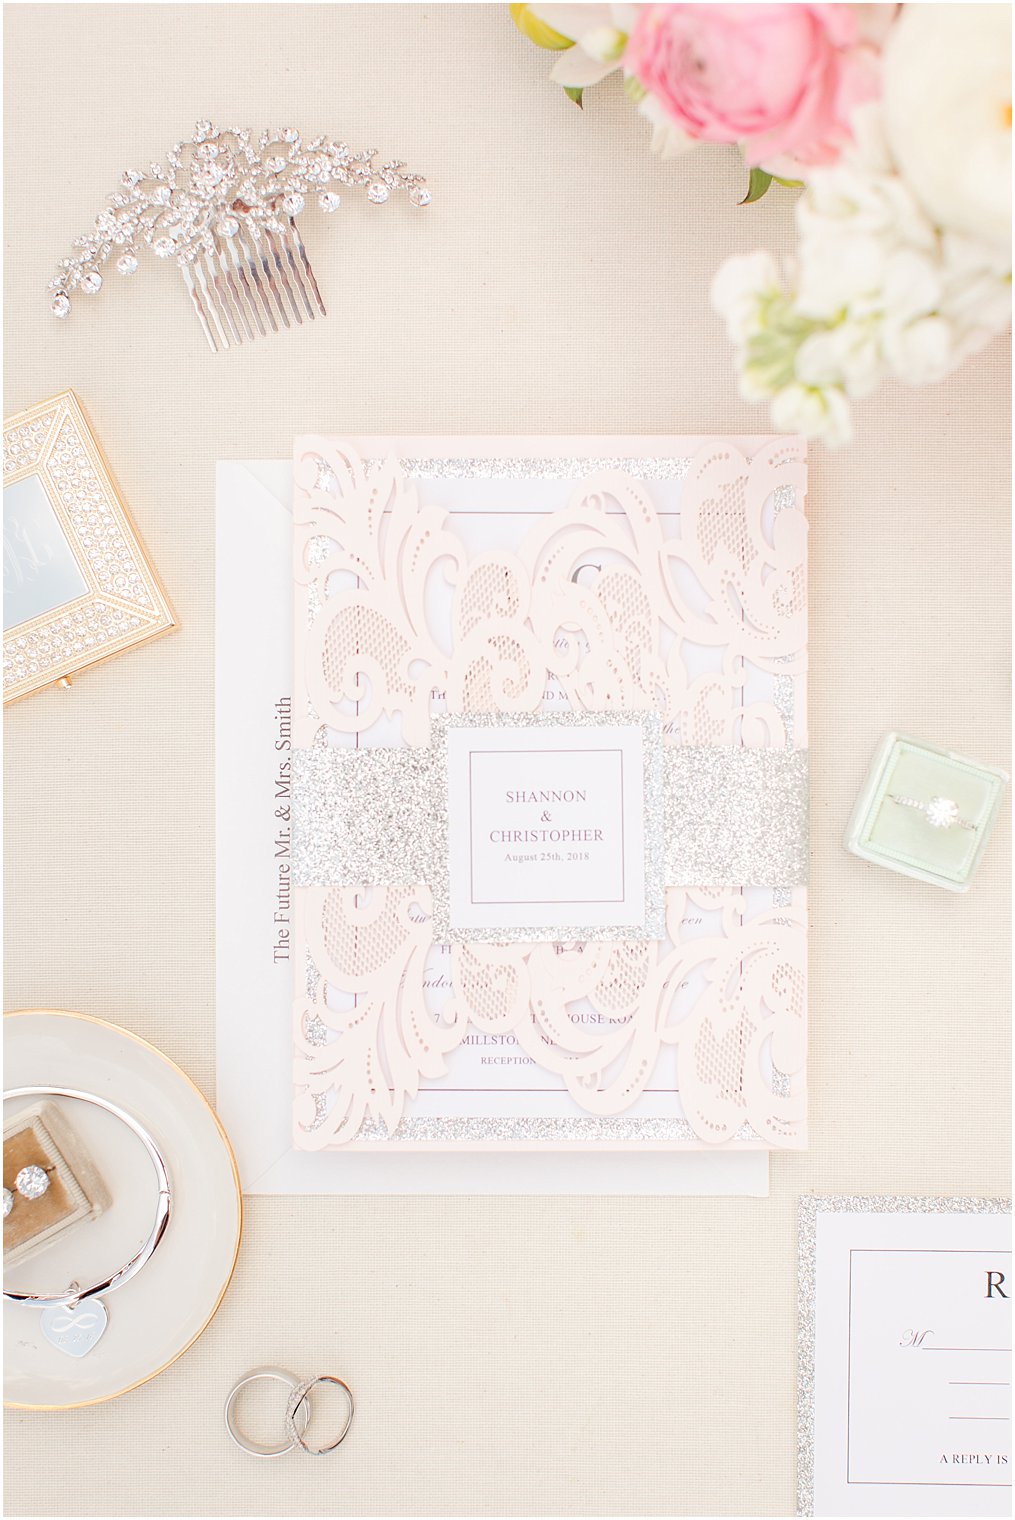 lace detail on wedding invitations by Elegant Wedding Invites